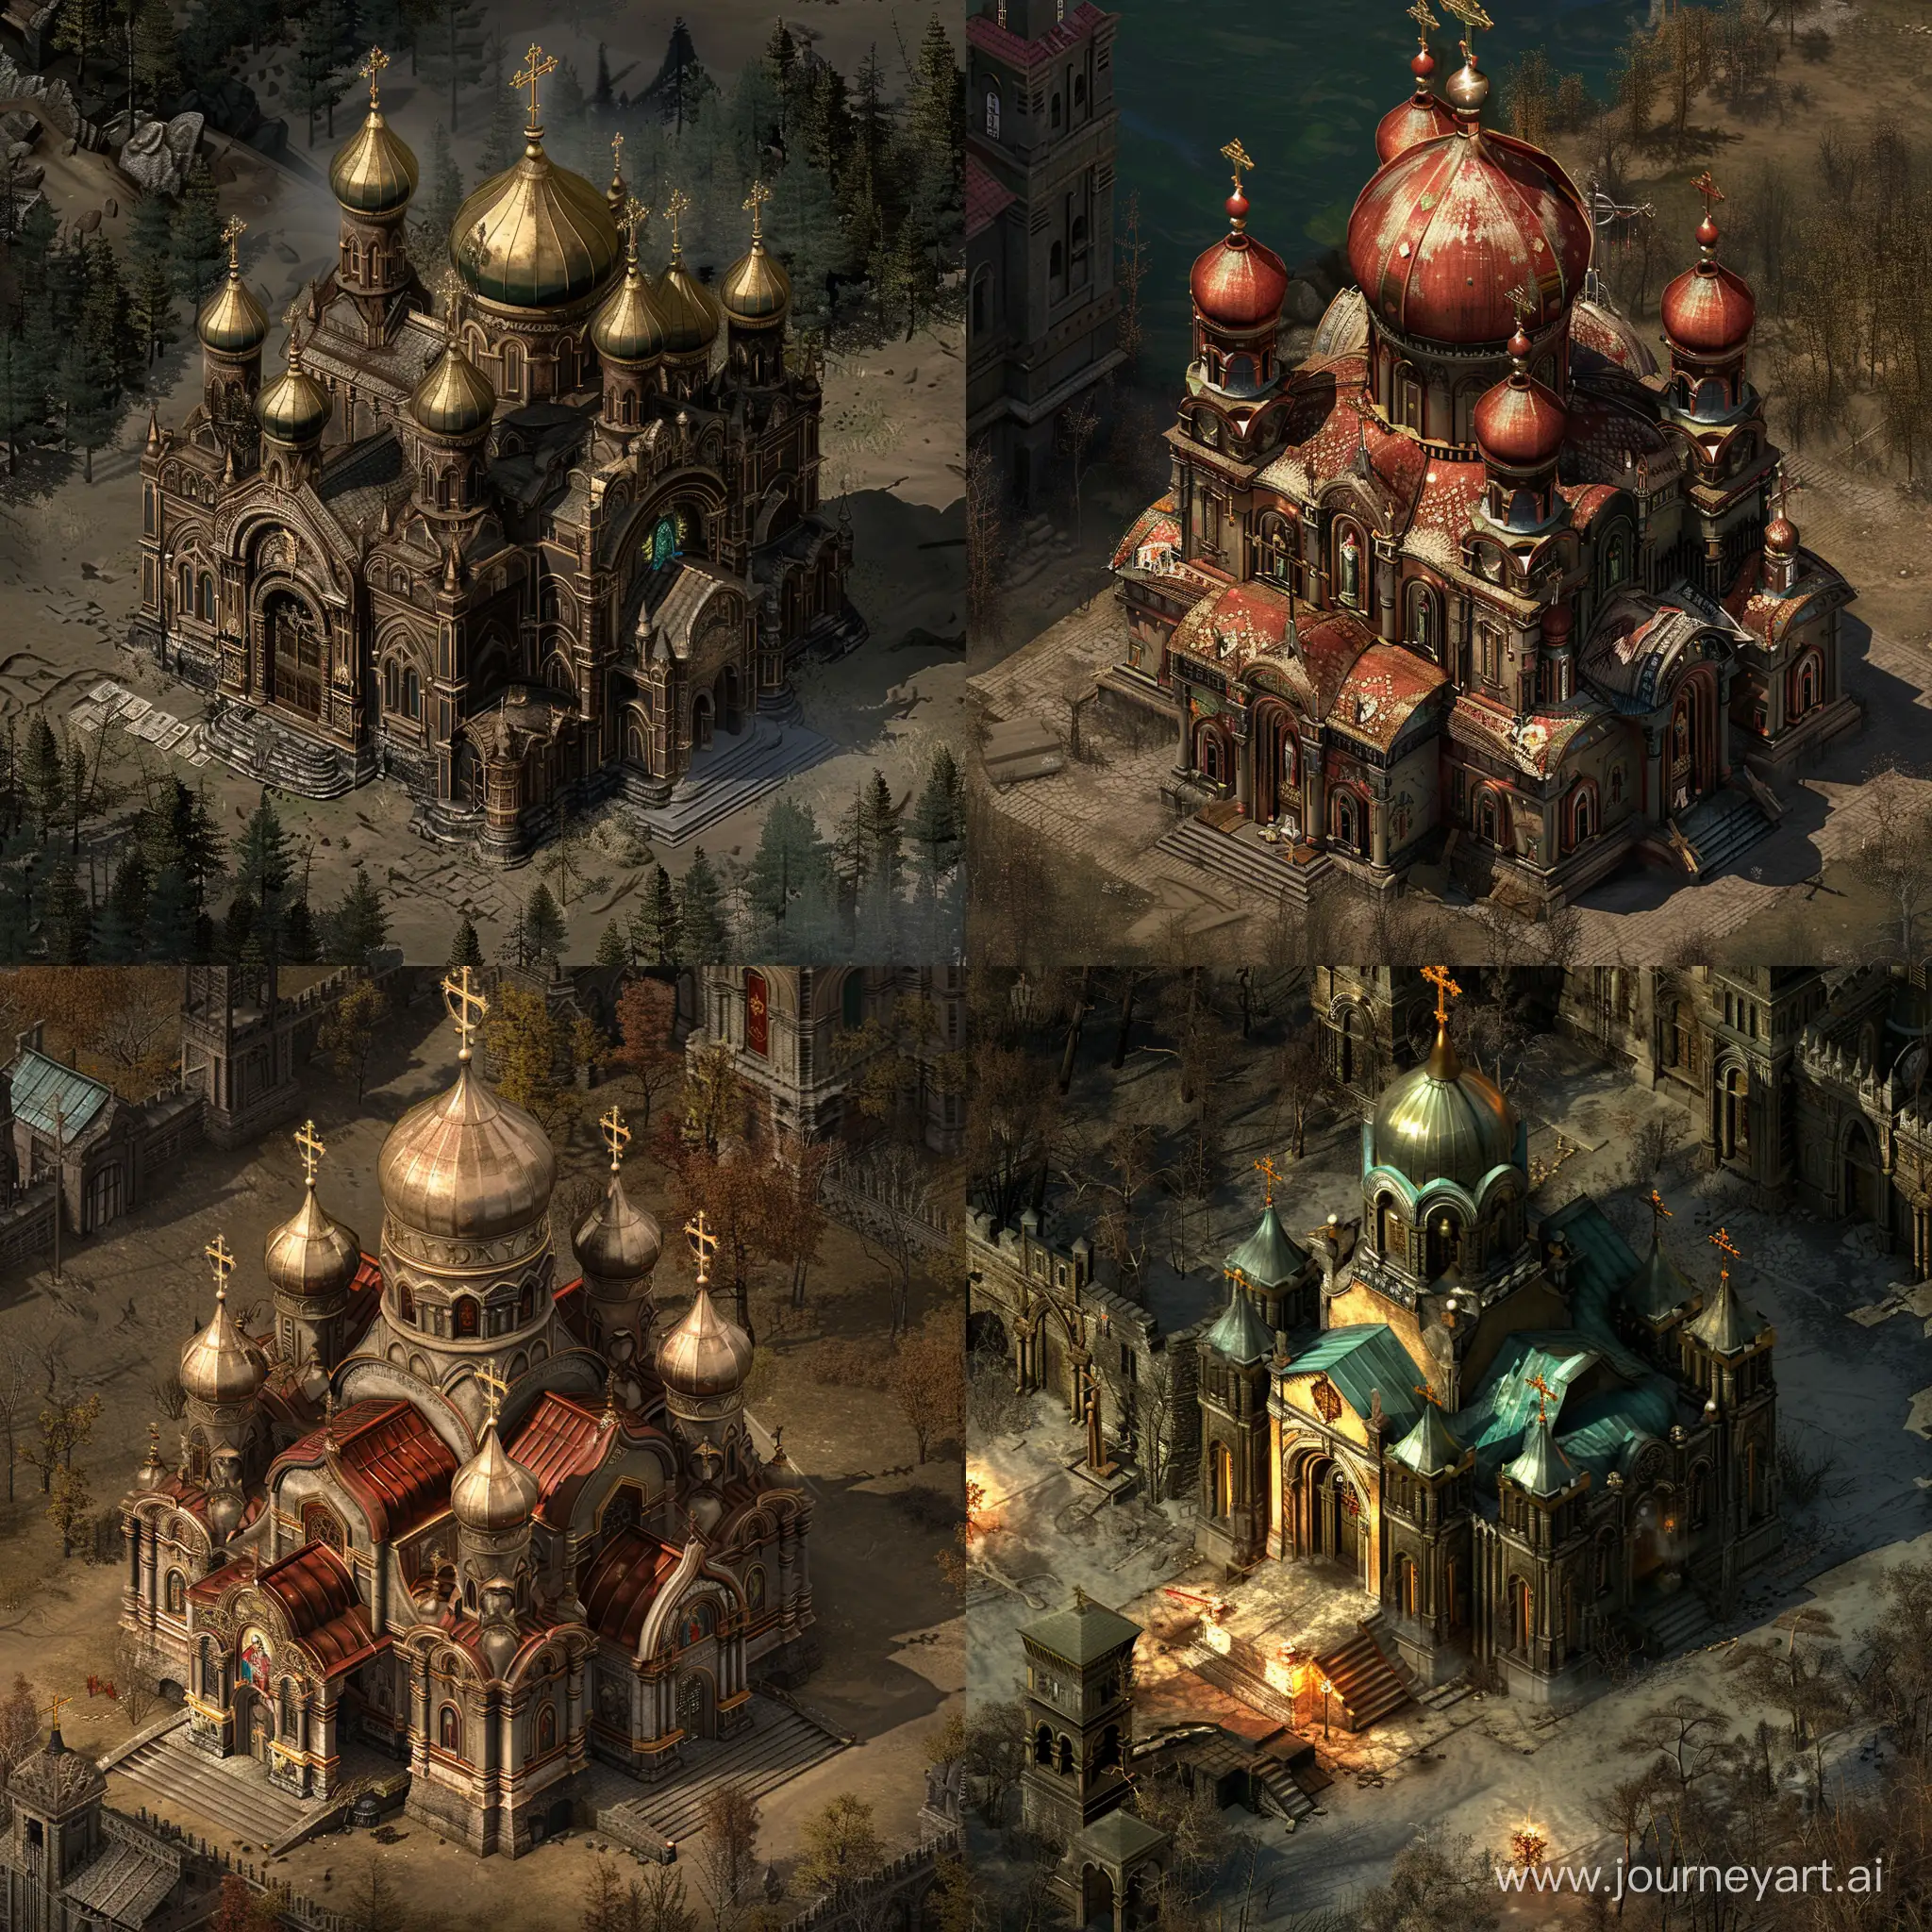 Russian Orthodox Church in a computer game Diablo